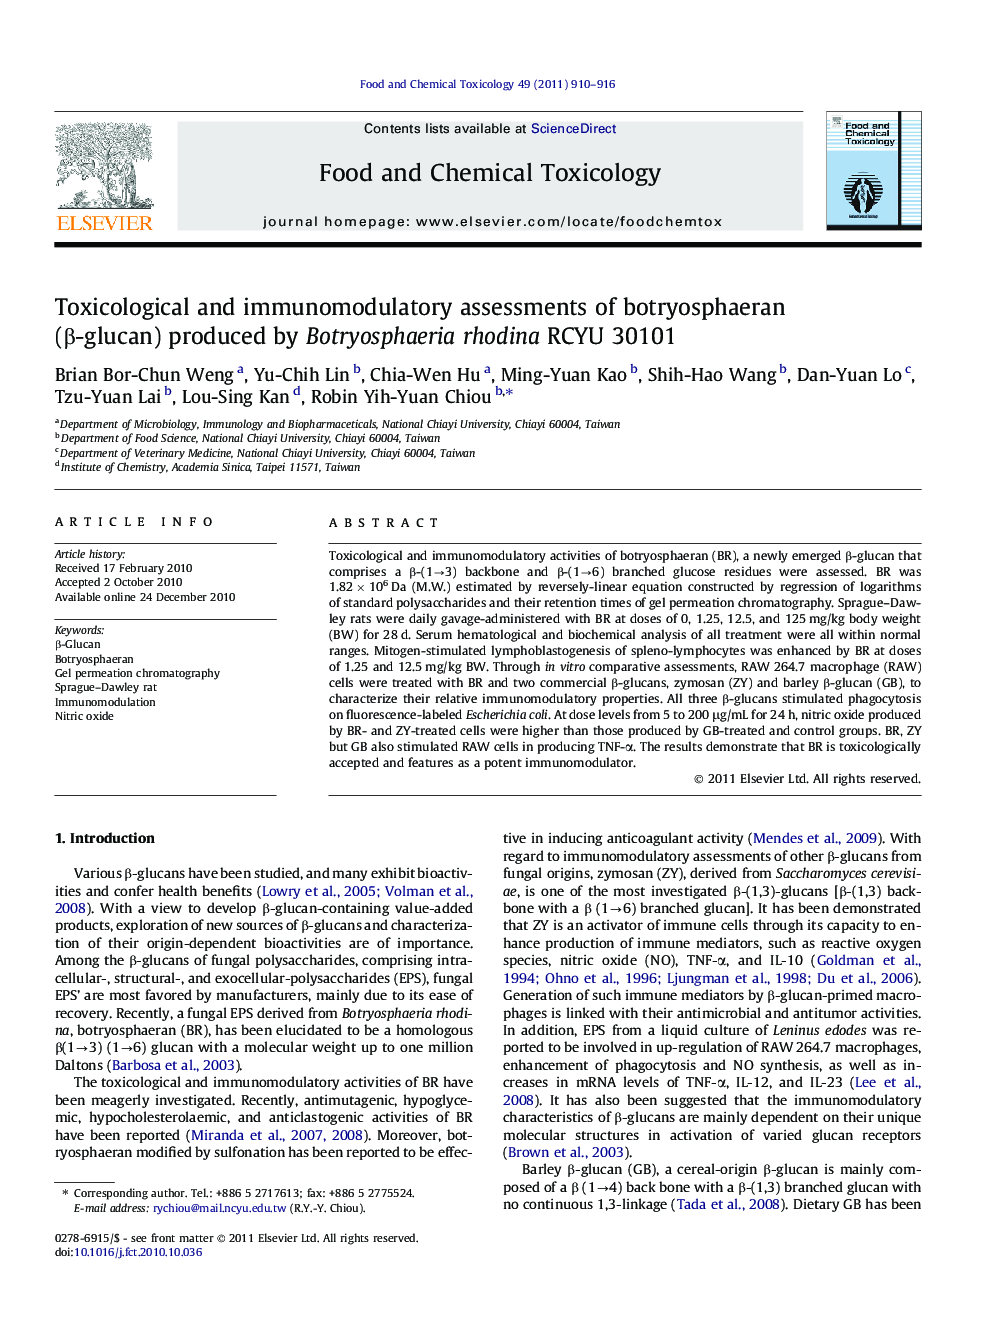 Toxicological and immunomodulatory assessments of botryosphaeran (β-glucan) produced by Botryosphaeria rhodina RCYU 30101